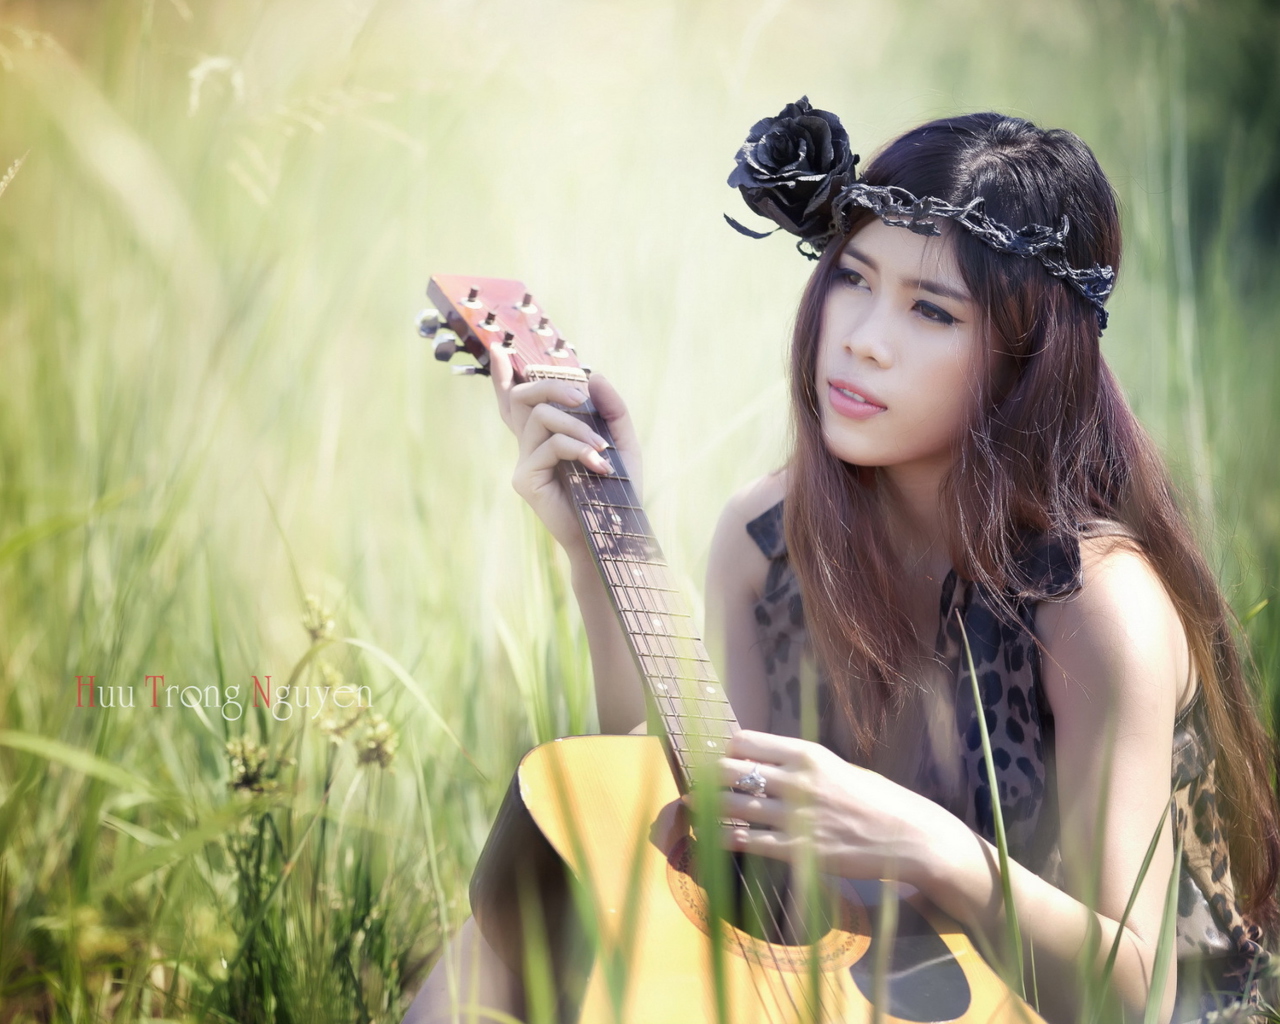 Das Pretty Girl In Grass Playing Guitar Wallpaper 1280x1024